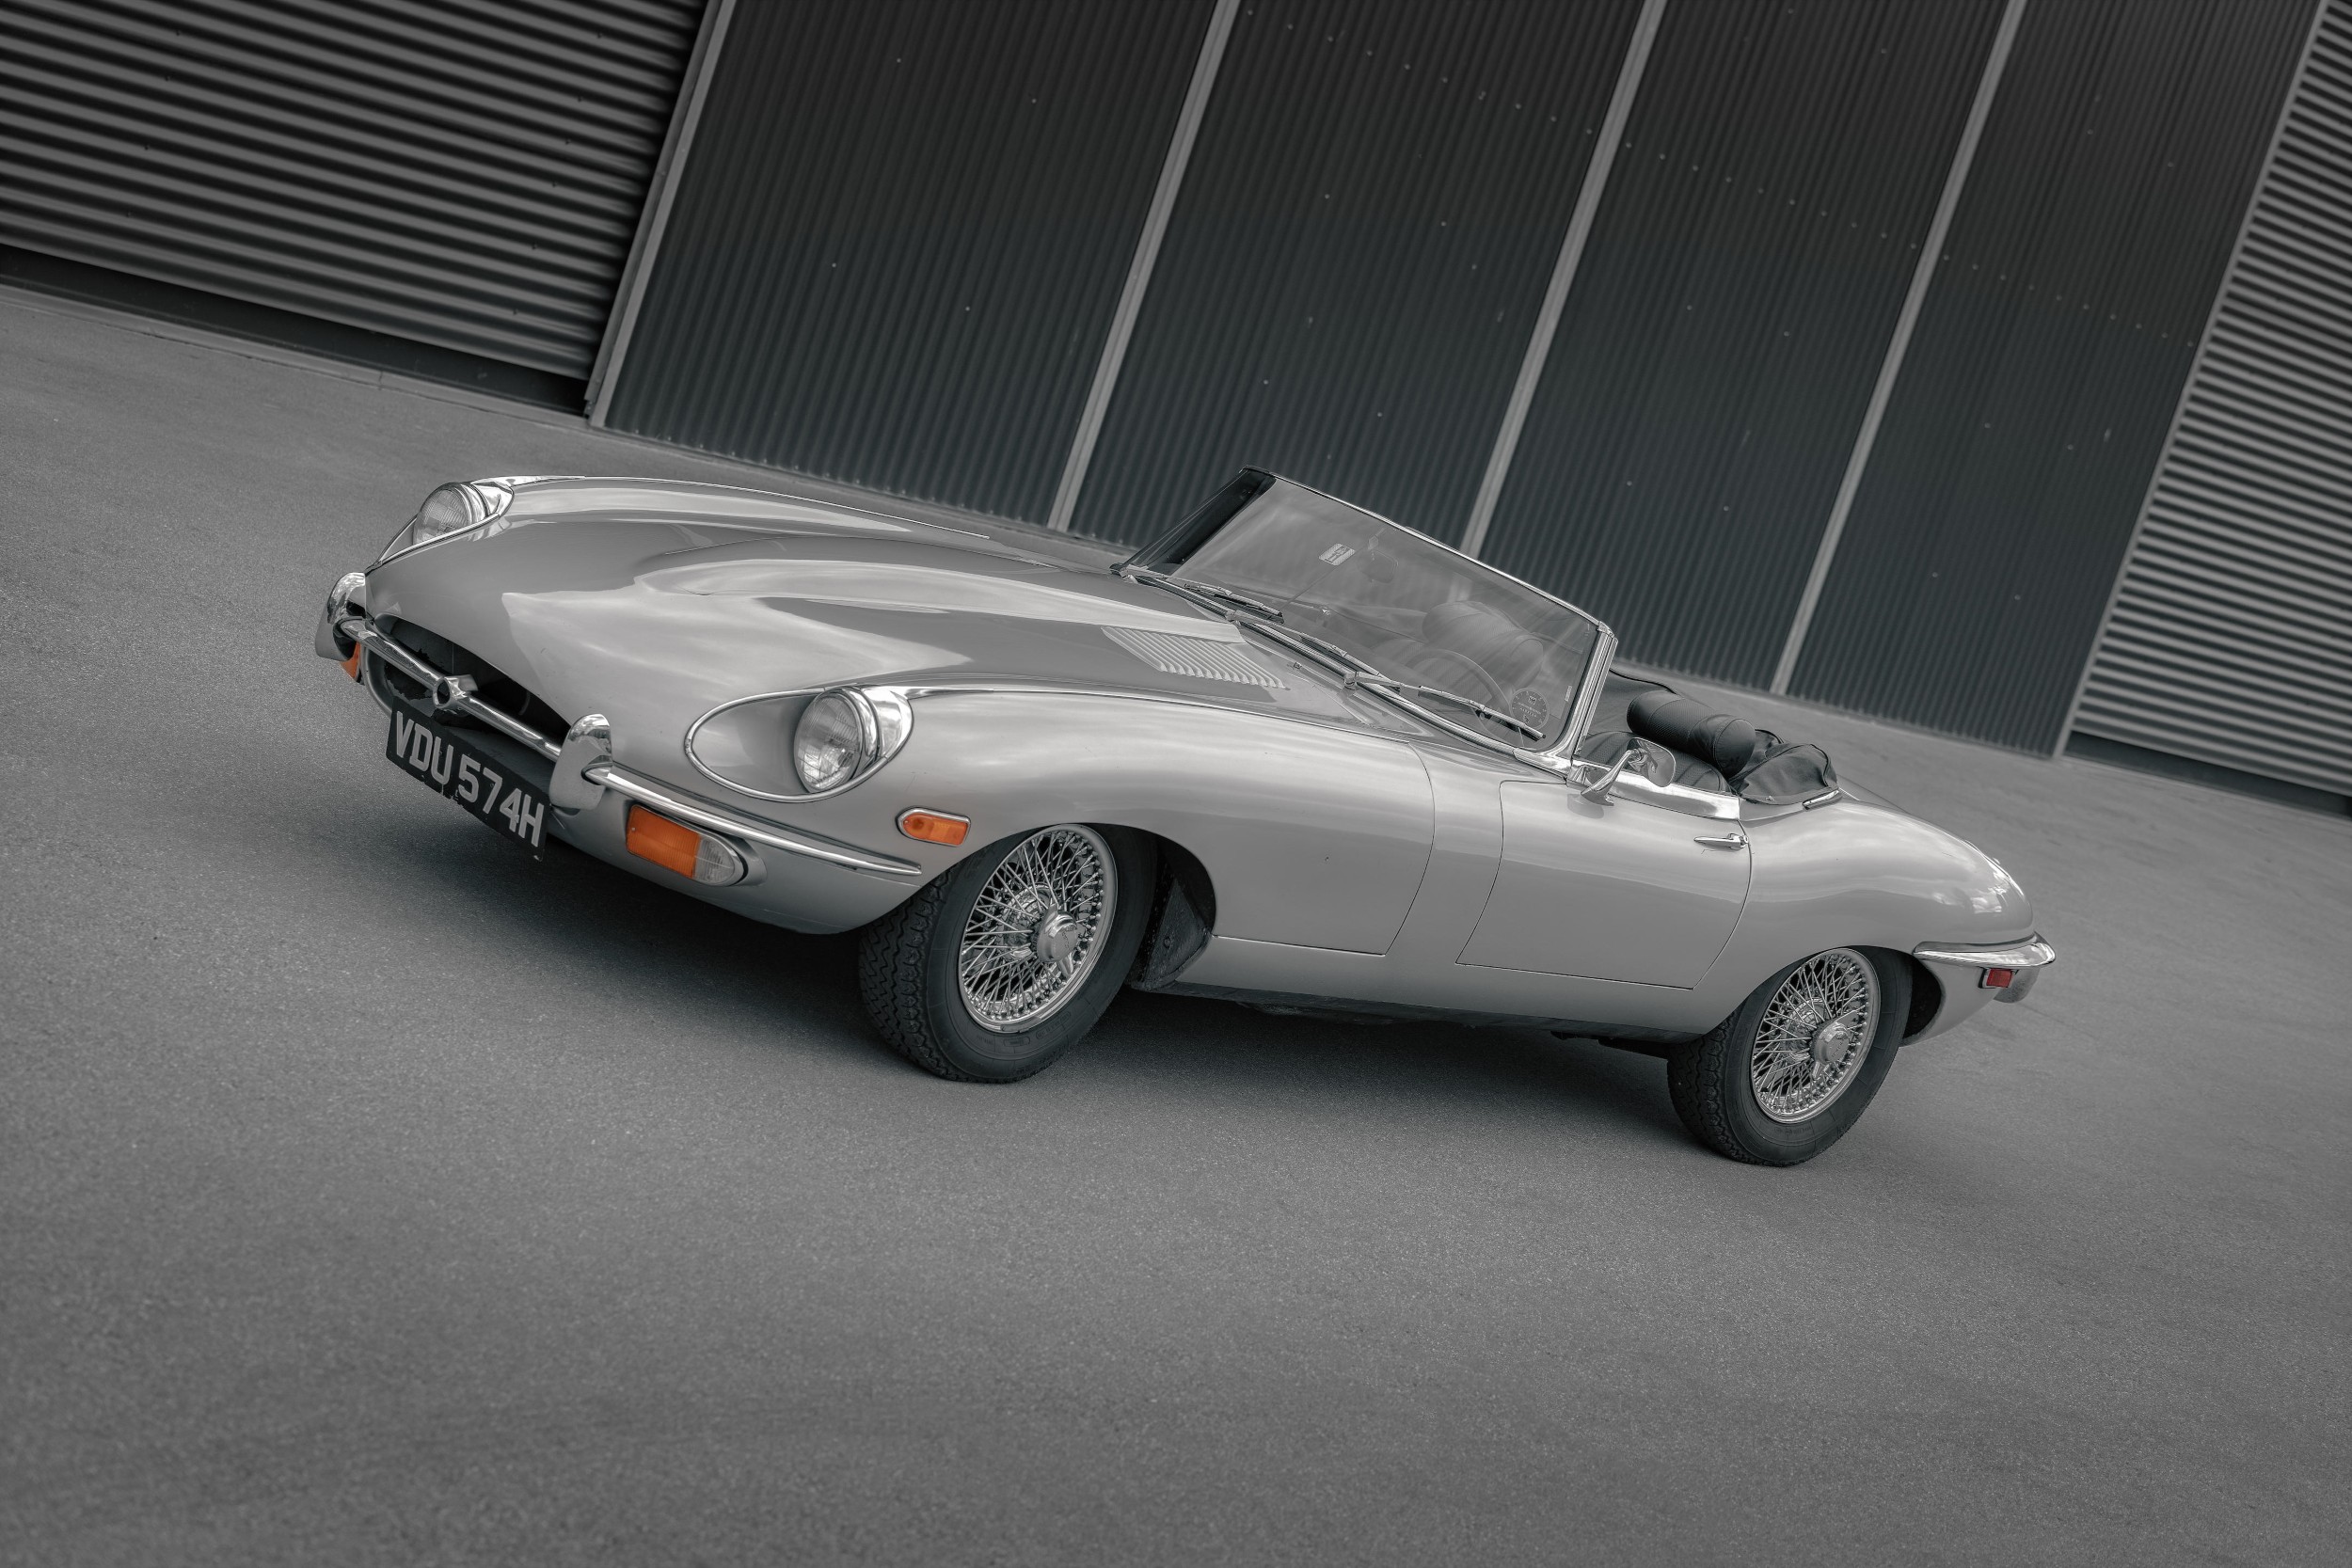 1961 Jaguar E-Type Sells For $1.14M, Sets Record At Auction